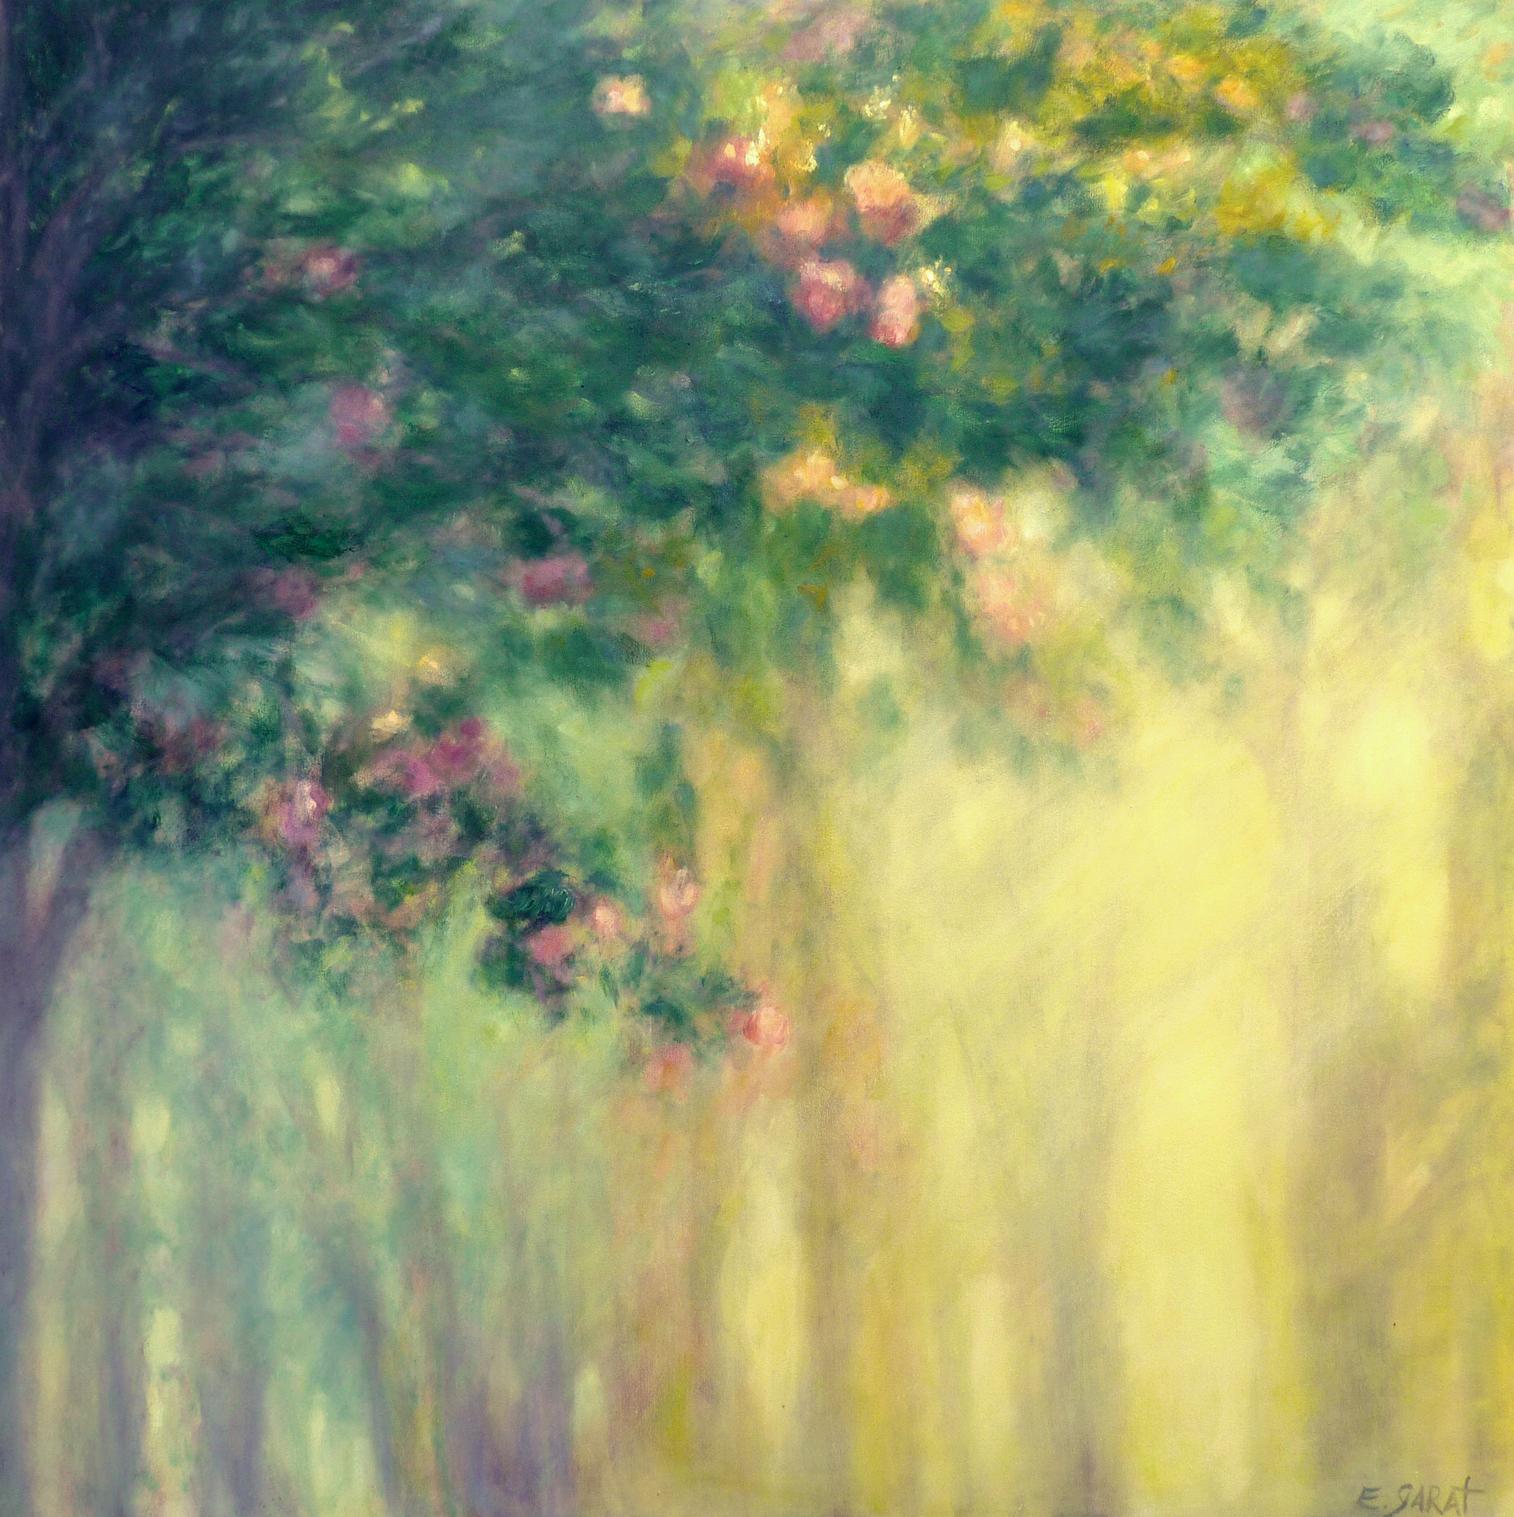 Dawn Light, Flowering Trees - Art by Elizabeth Garat